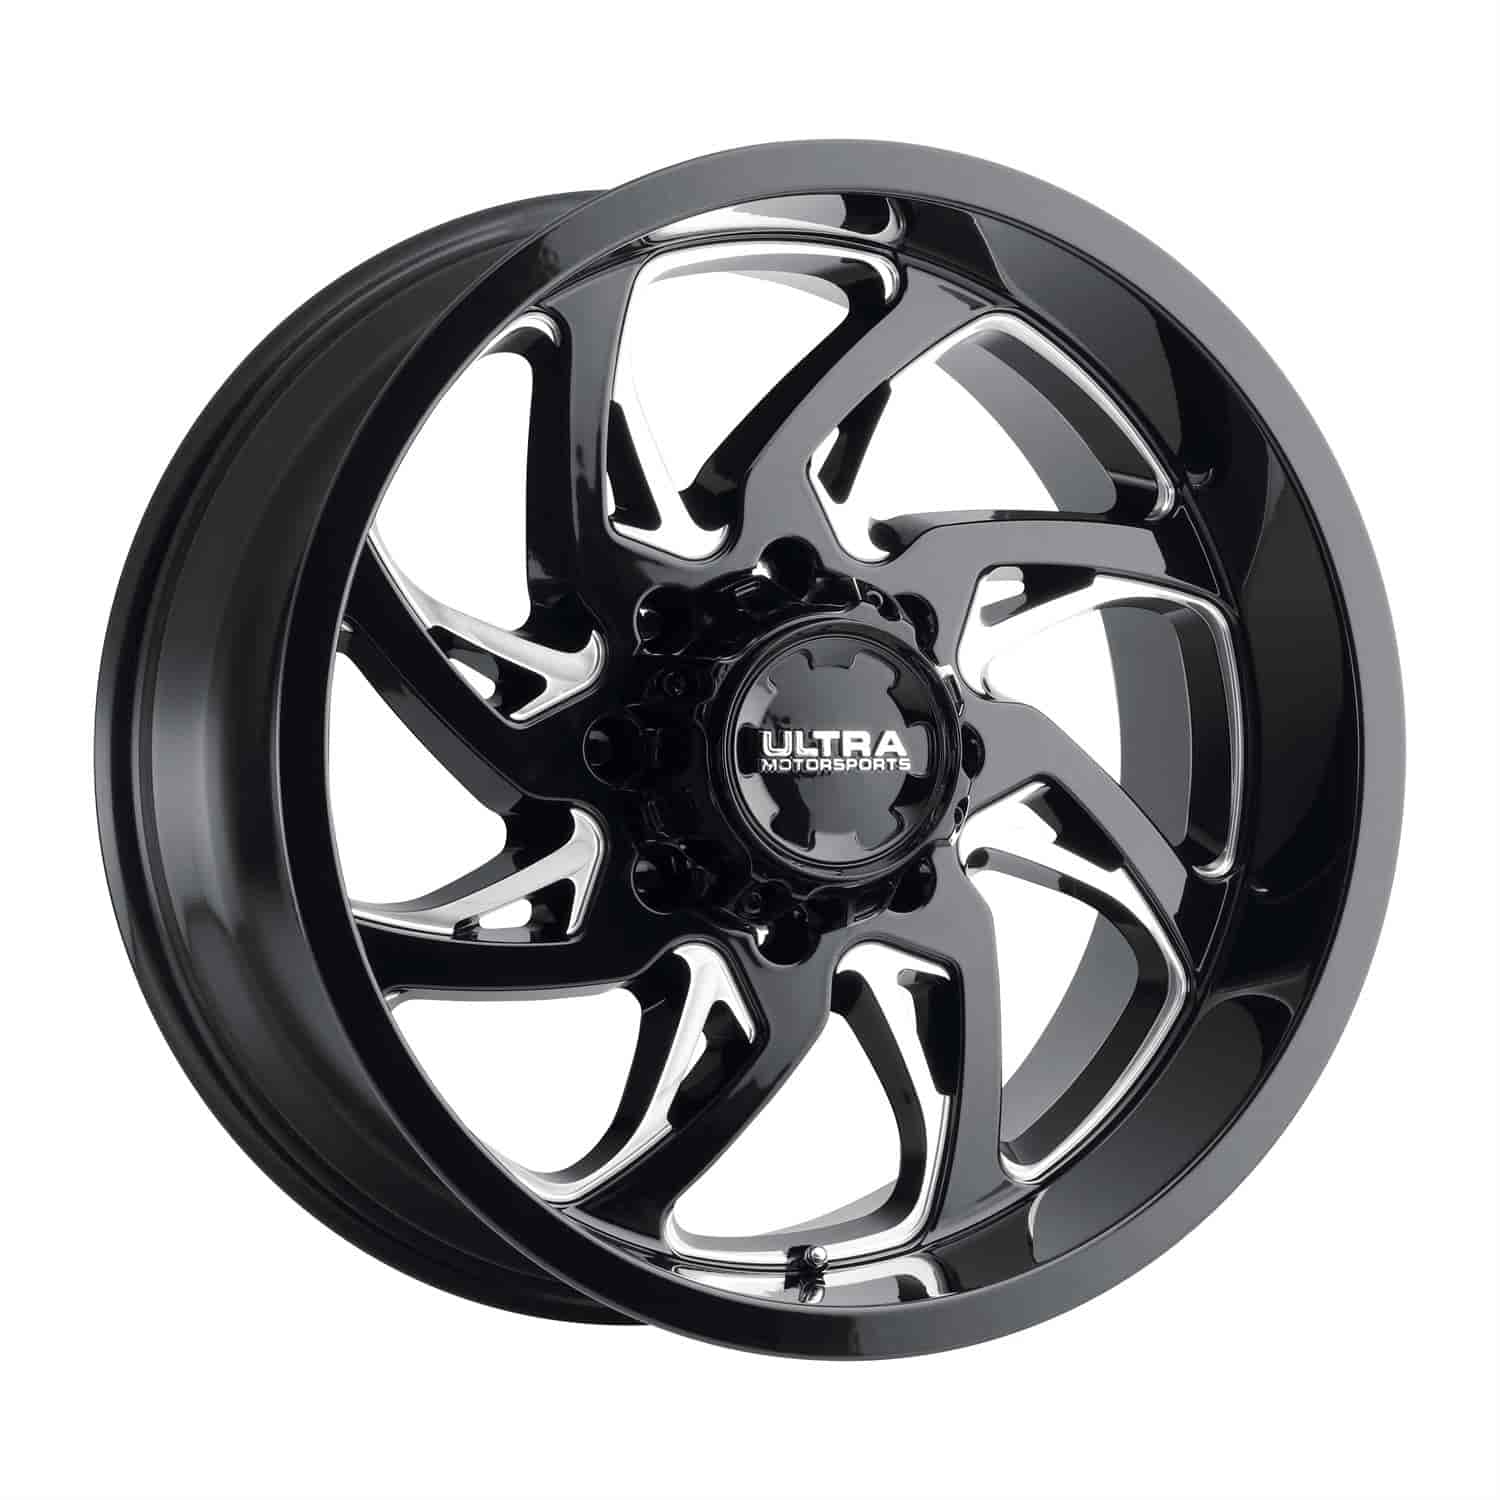 230-Series Villain Wheel, Size: 20x10", Bolt Pattern: 8x170 mm [Gloss Black w/Milled Accents]